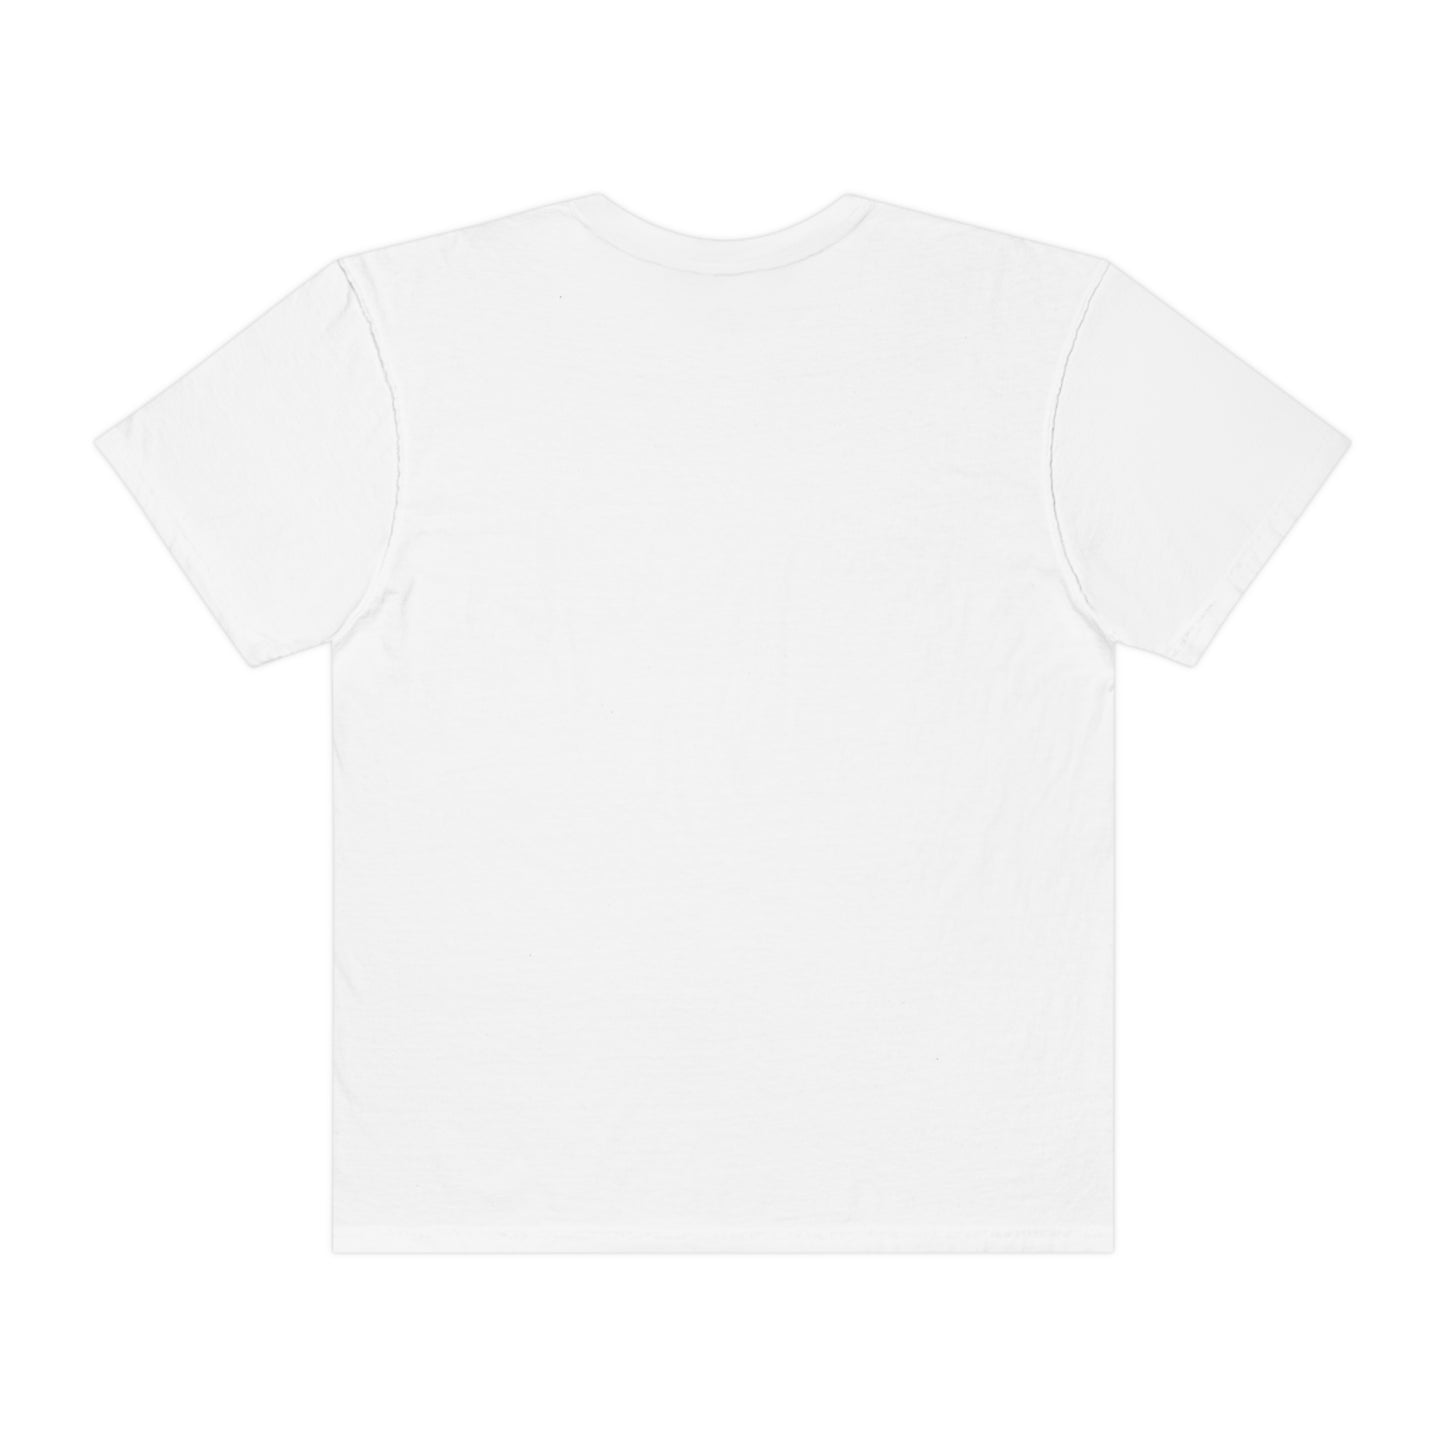 Steph Curry Basketball Unisex Garment-Dyed T-shirt